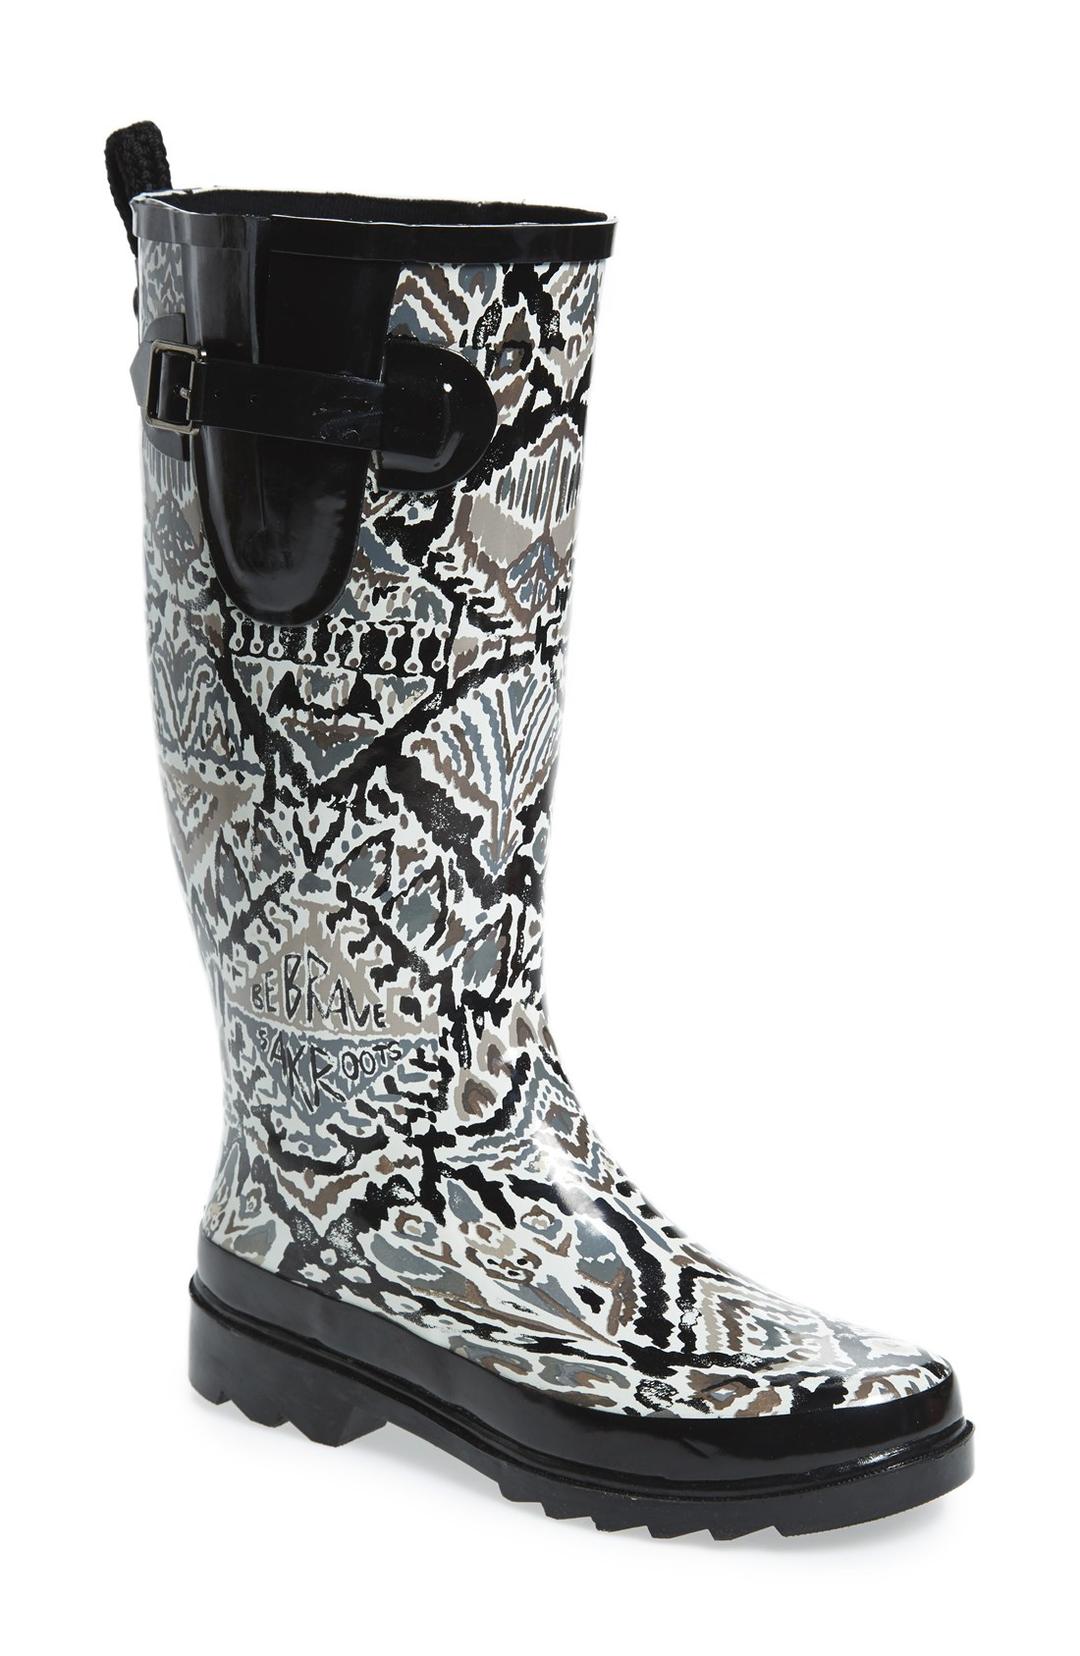 women's rain boots narrow calf